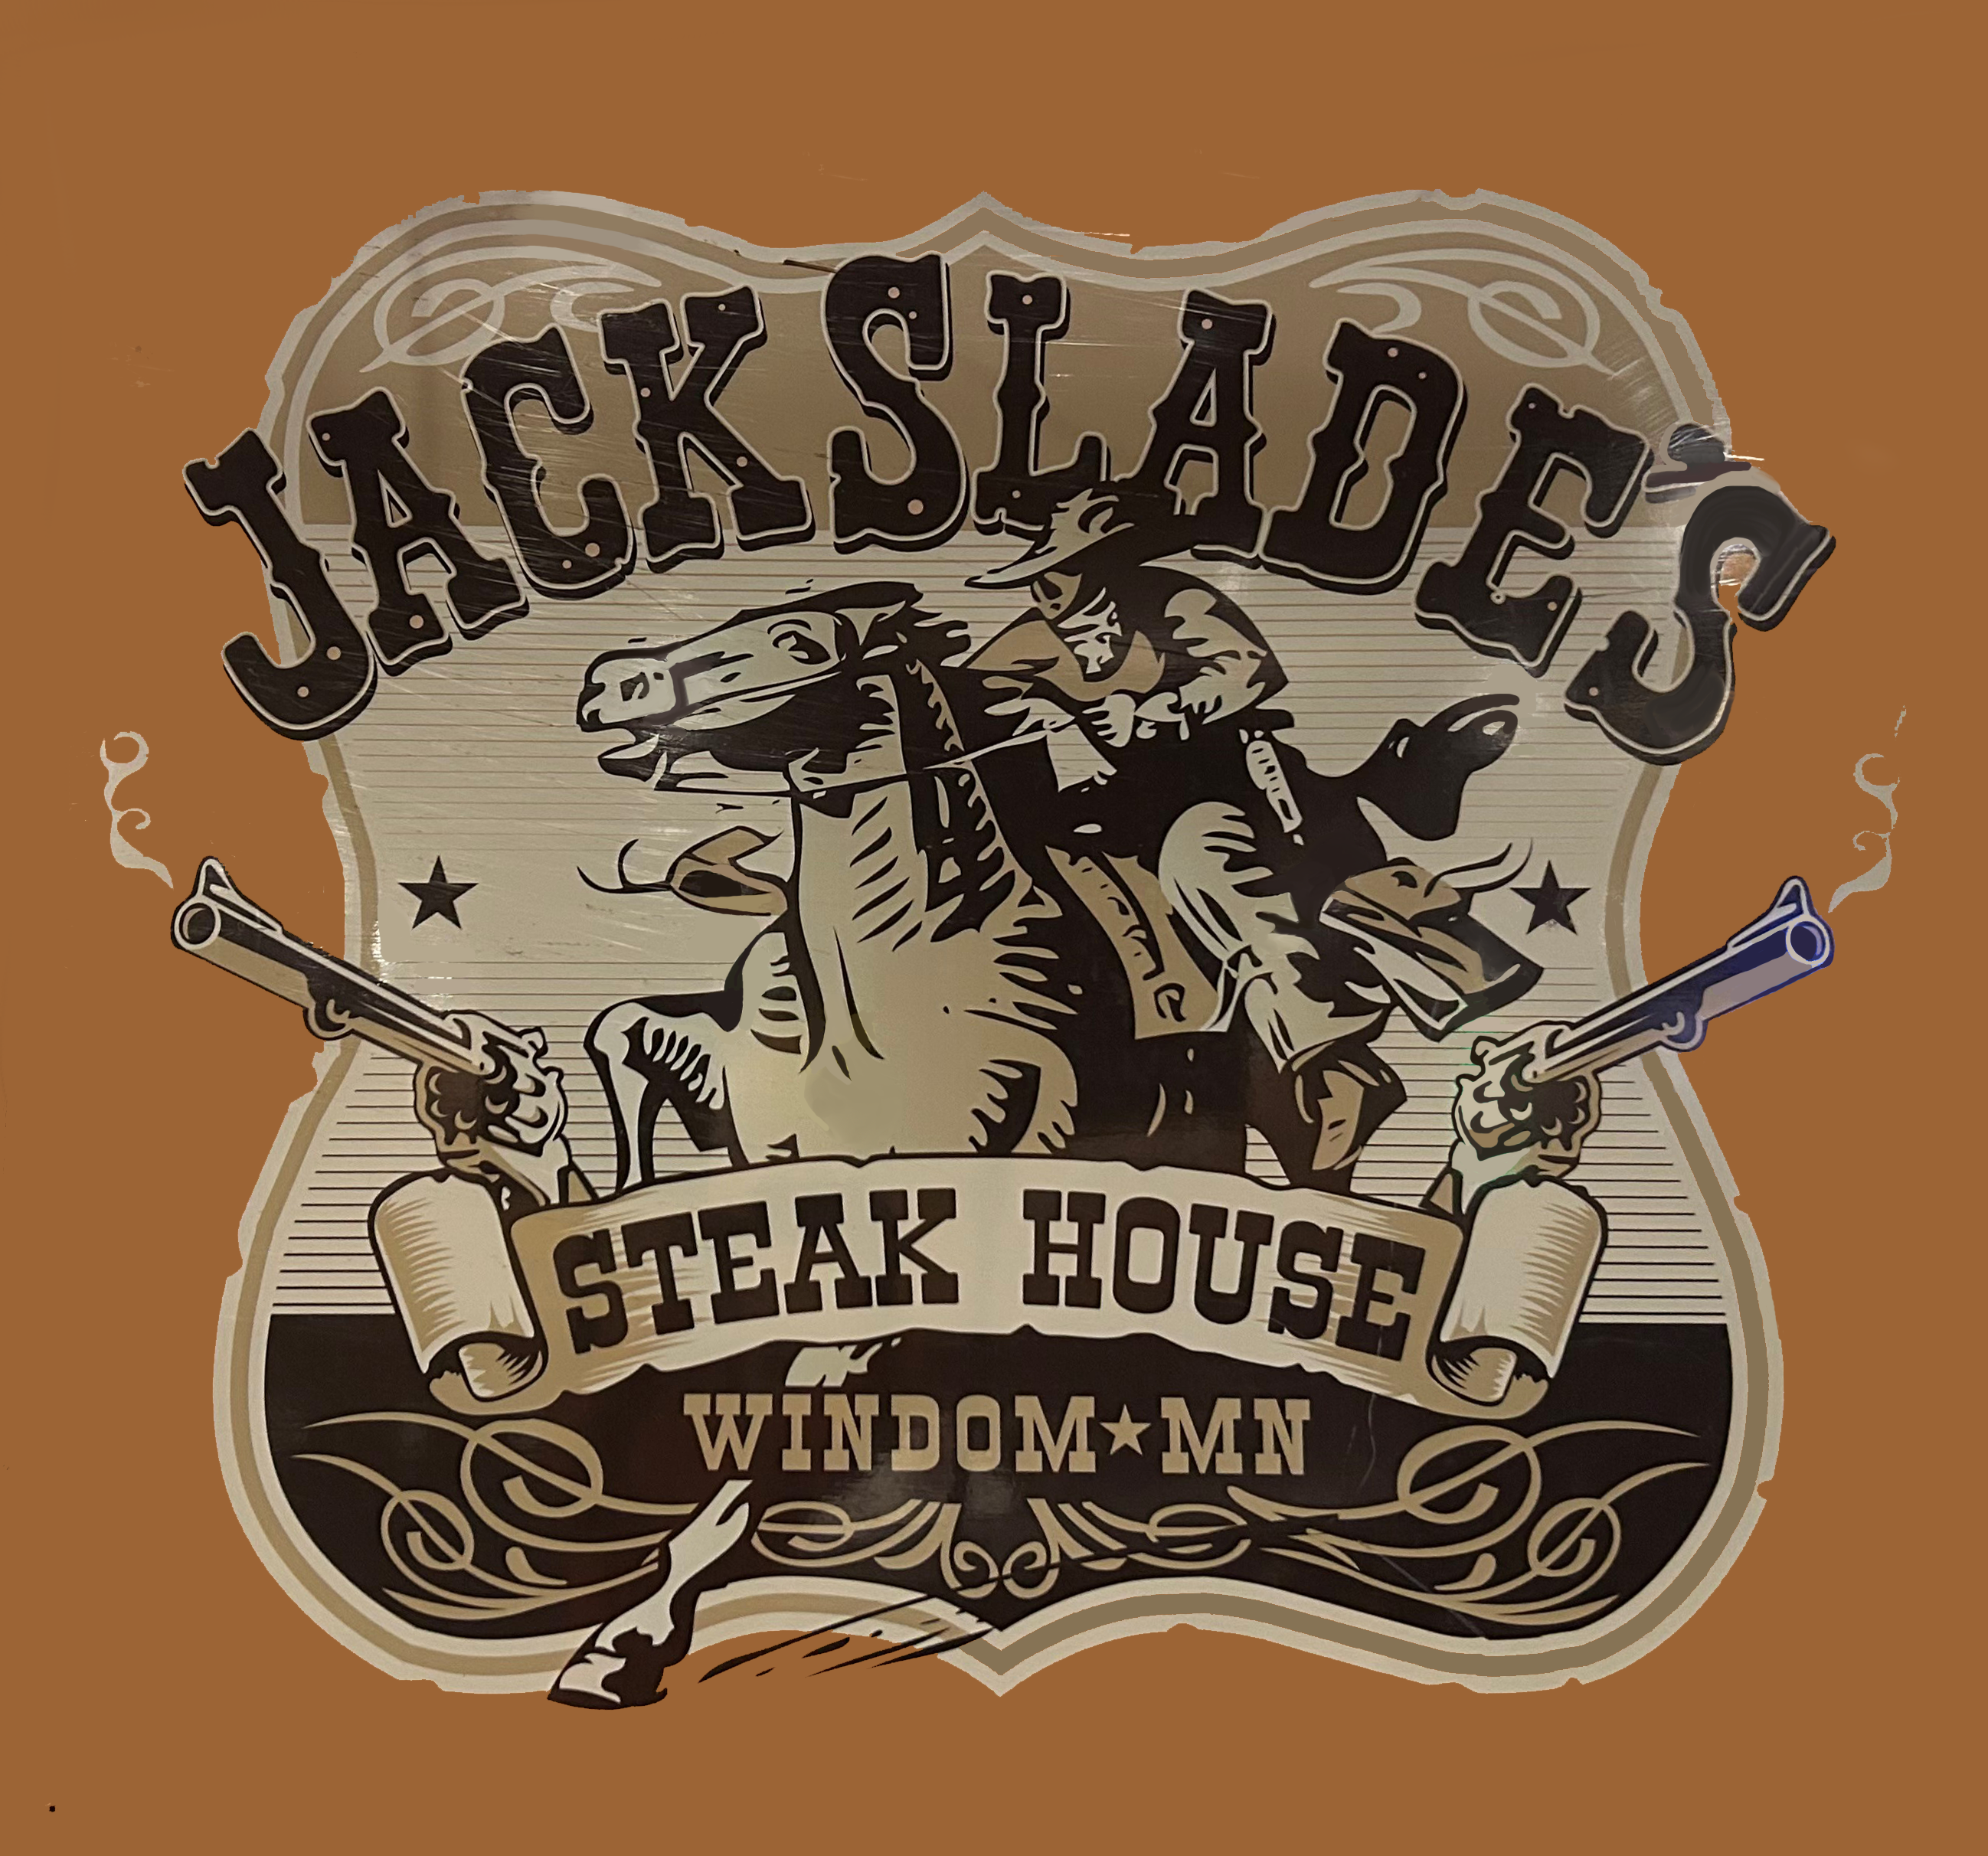 Phat Pheasant Pub/Jack Slade’s Steakhouse